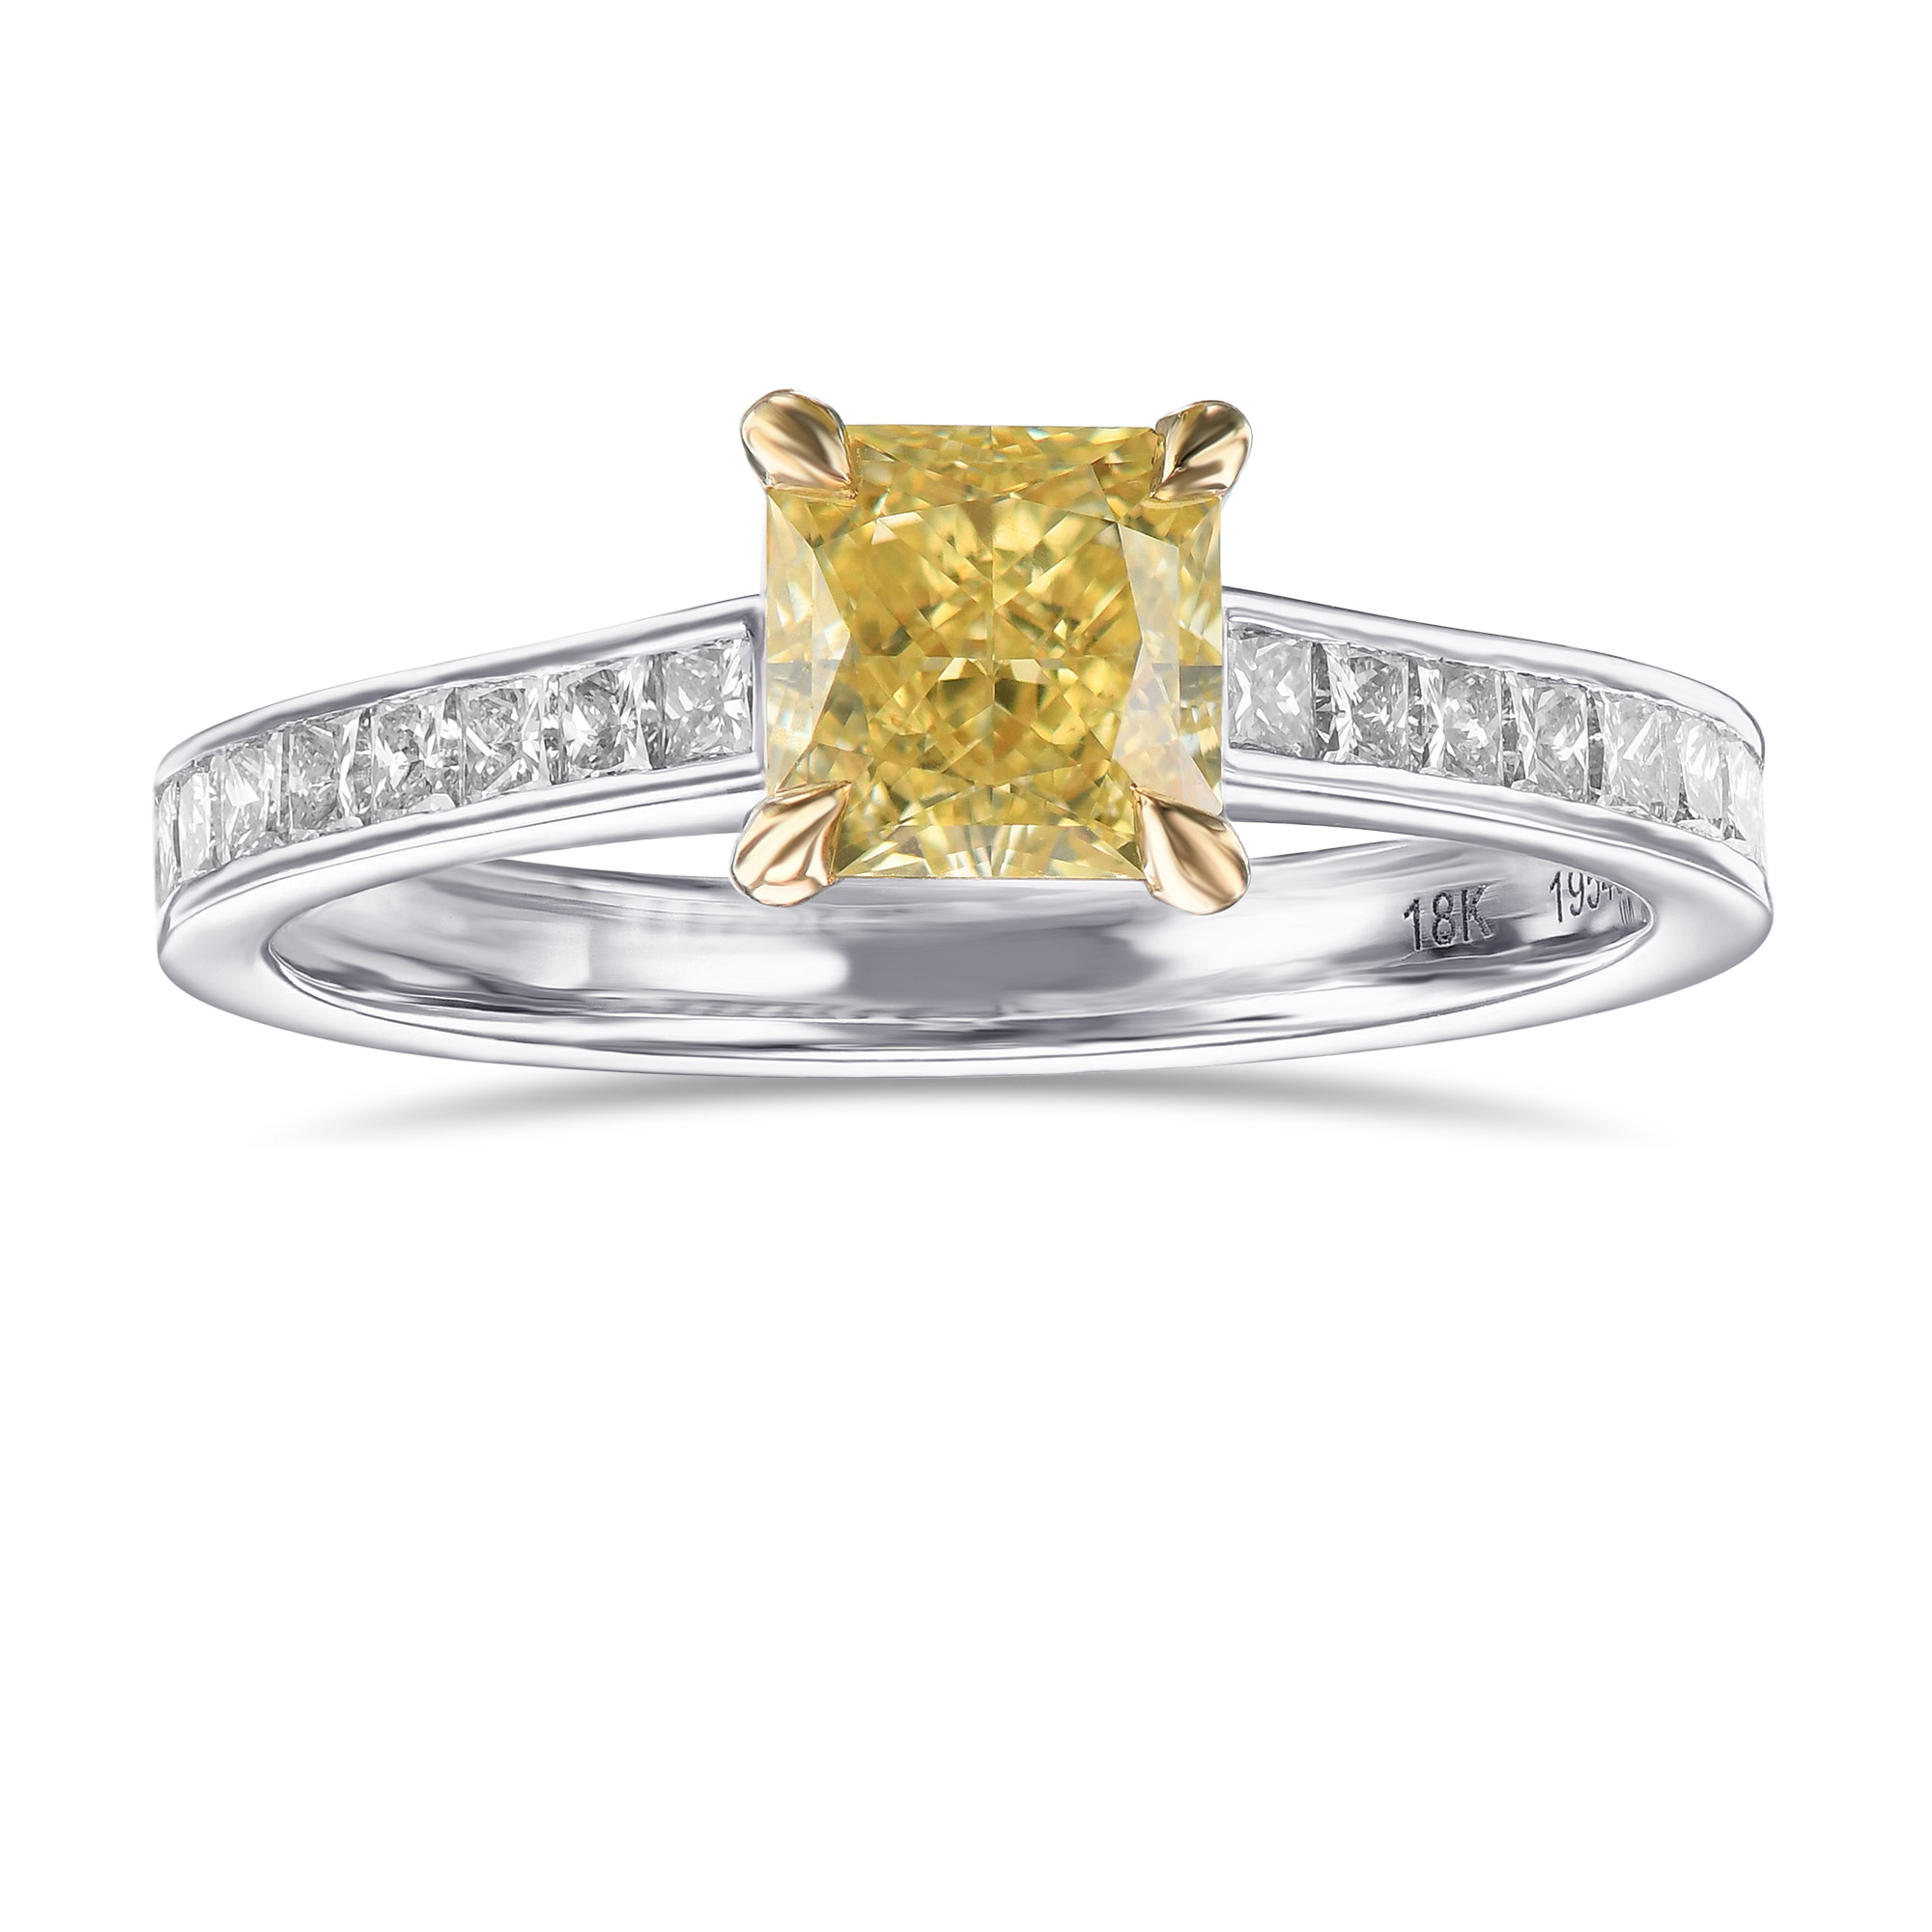 Fancy Intense Yellow Radiant Diamond Side Stone Ring, SKU 195458 (1.48Ct TW)